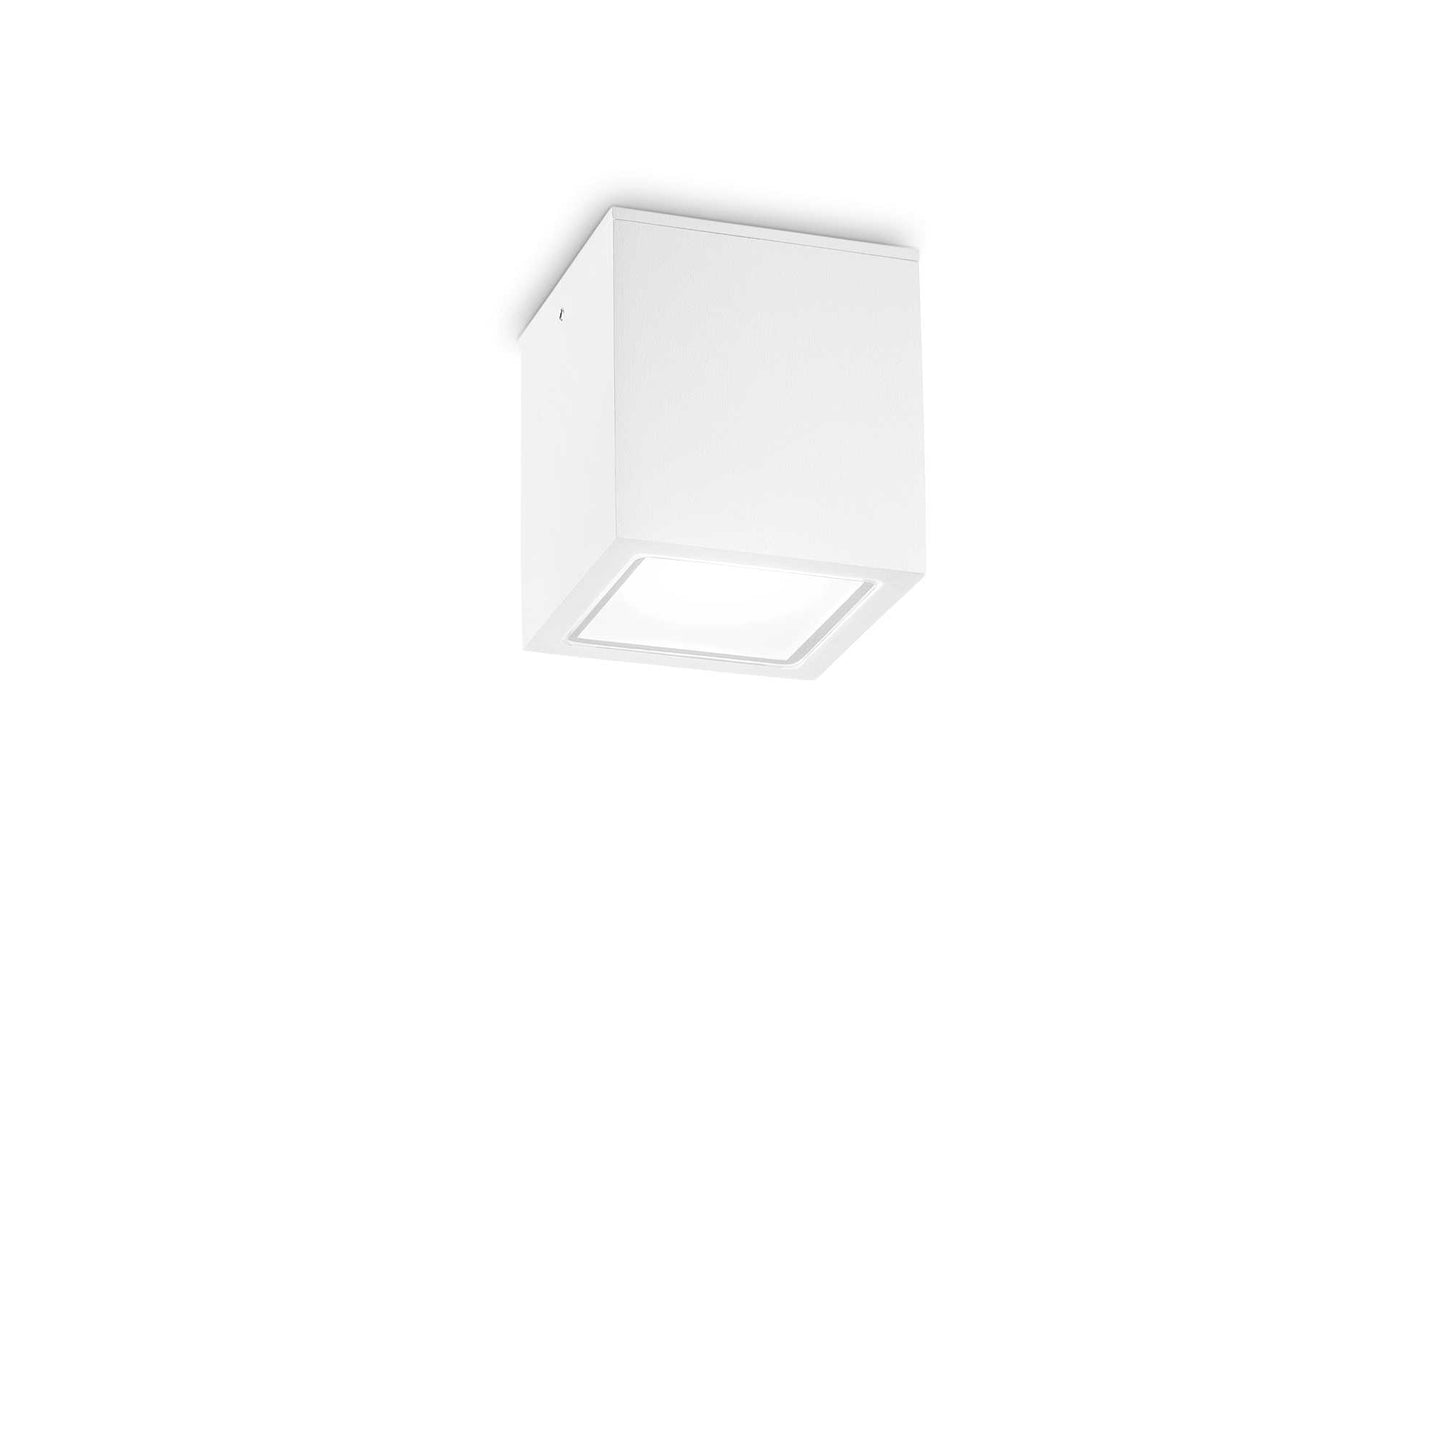 Plafonnier extérieur blanc Ideal Lux 251561 TECHO SMALL GU10 LED IP54 plafonnier moderne